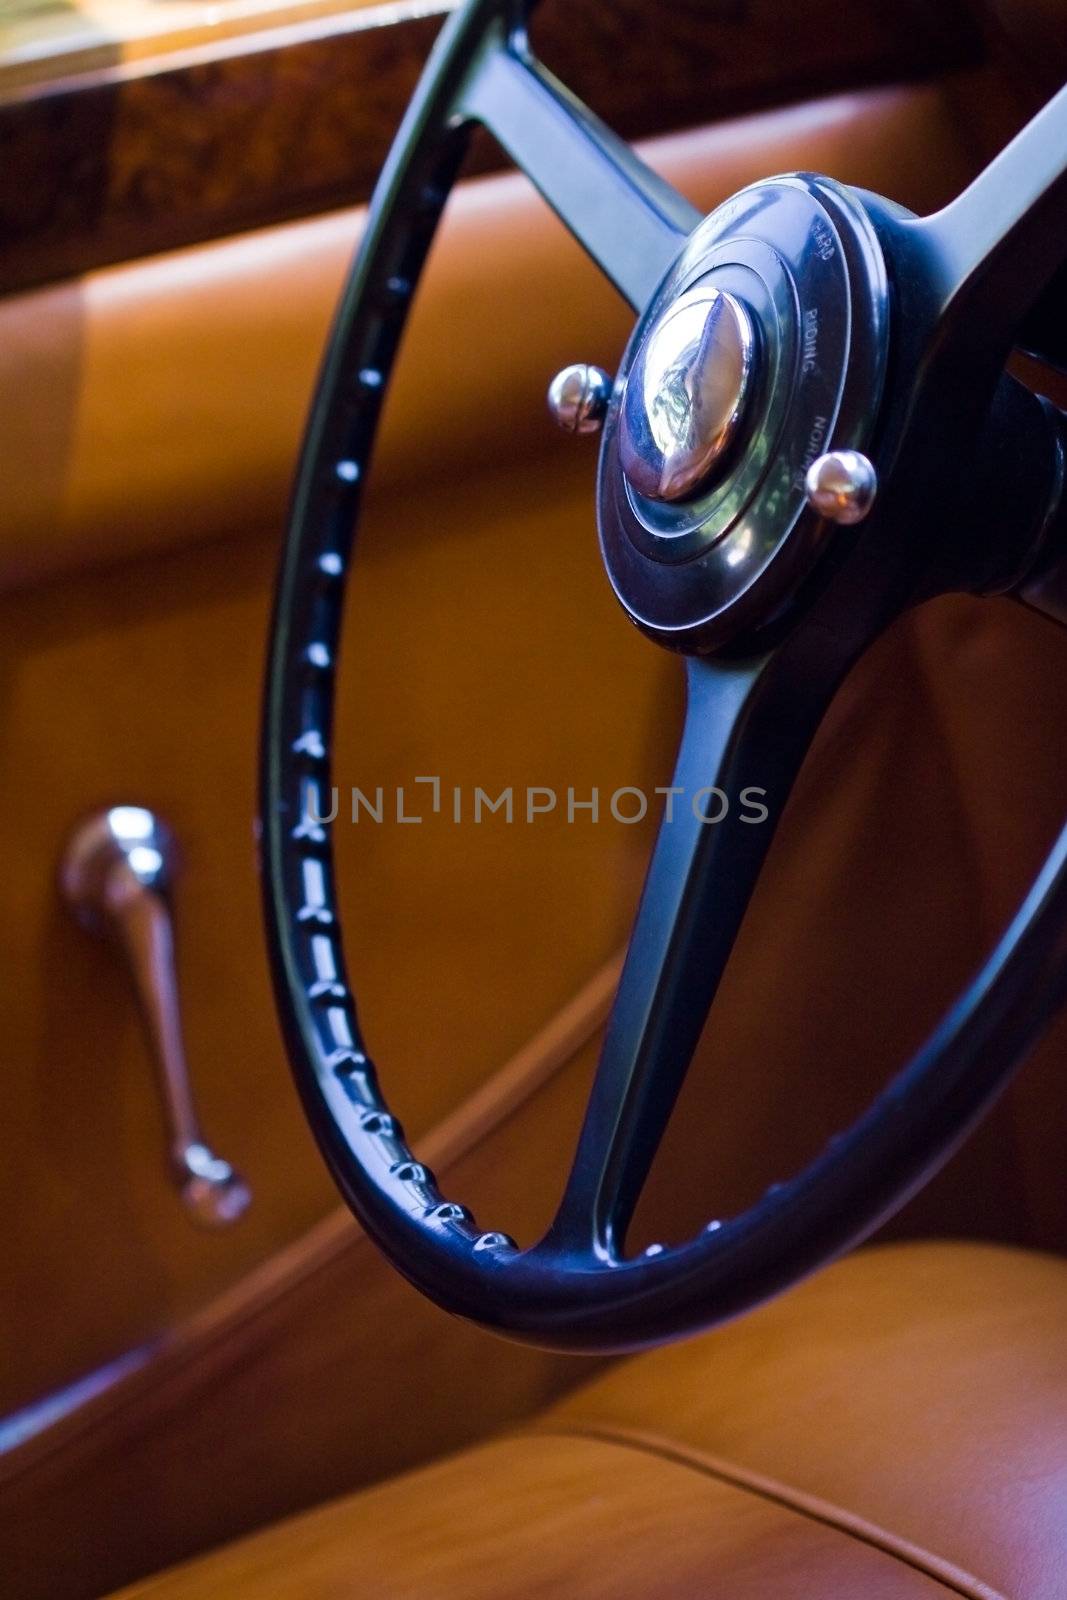 Vintage car interior by Gbuglok